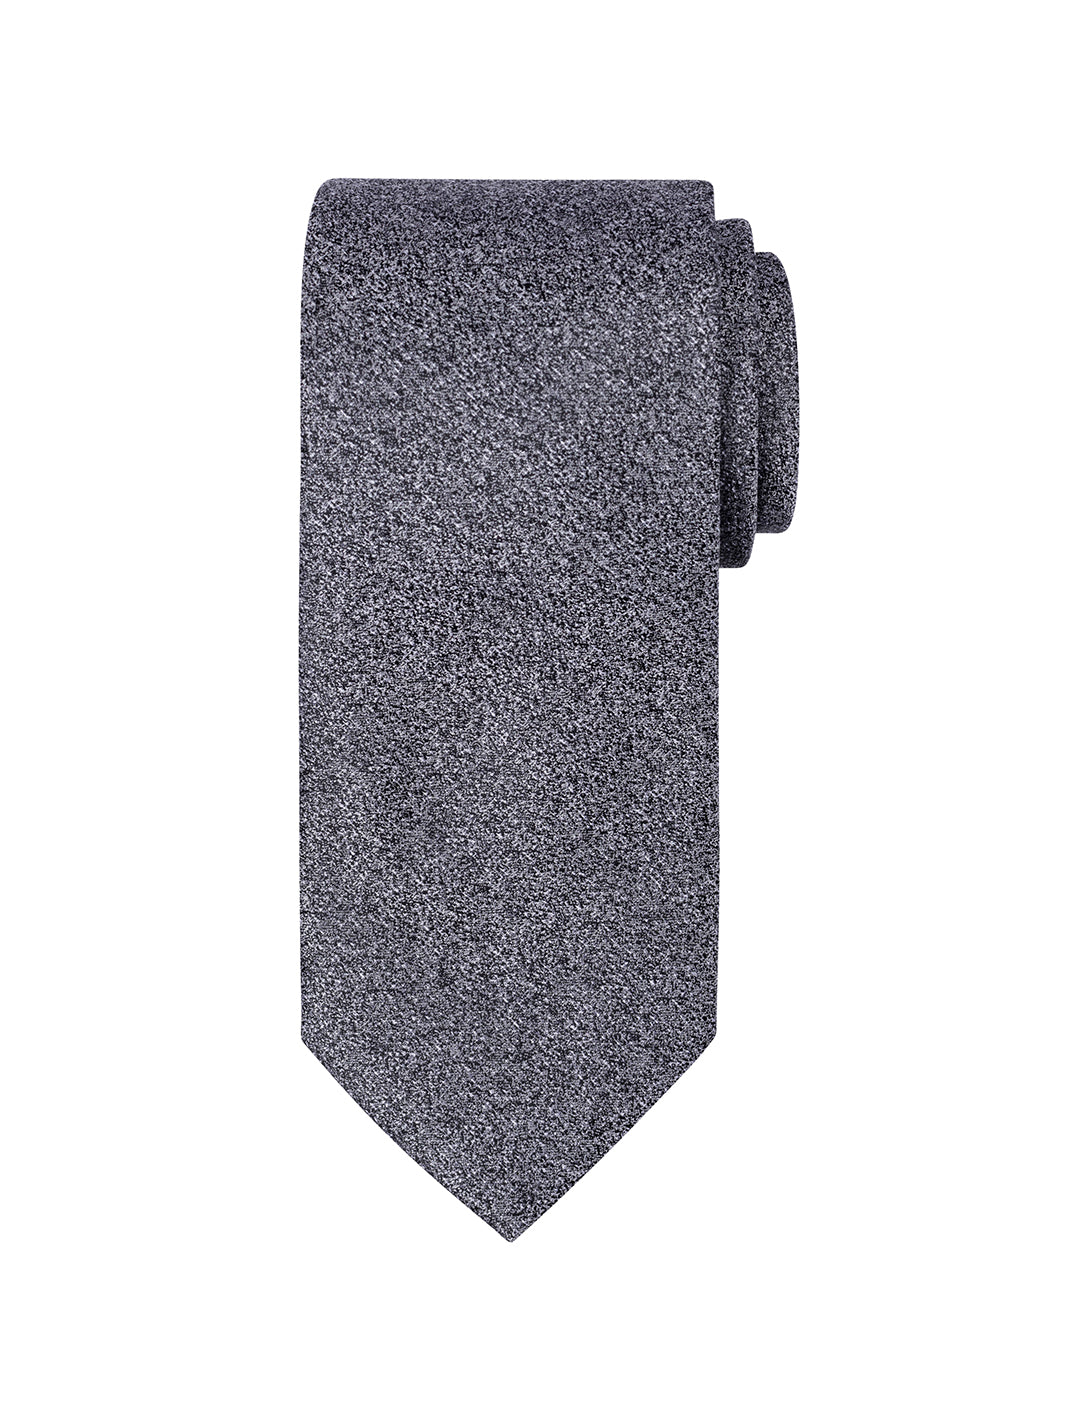 Men's T.O. Collection Speckle Tie - Grey